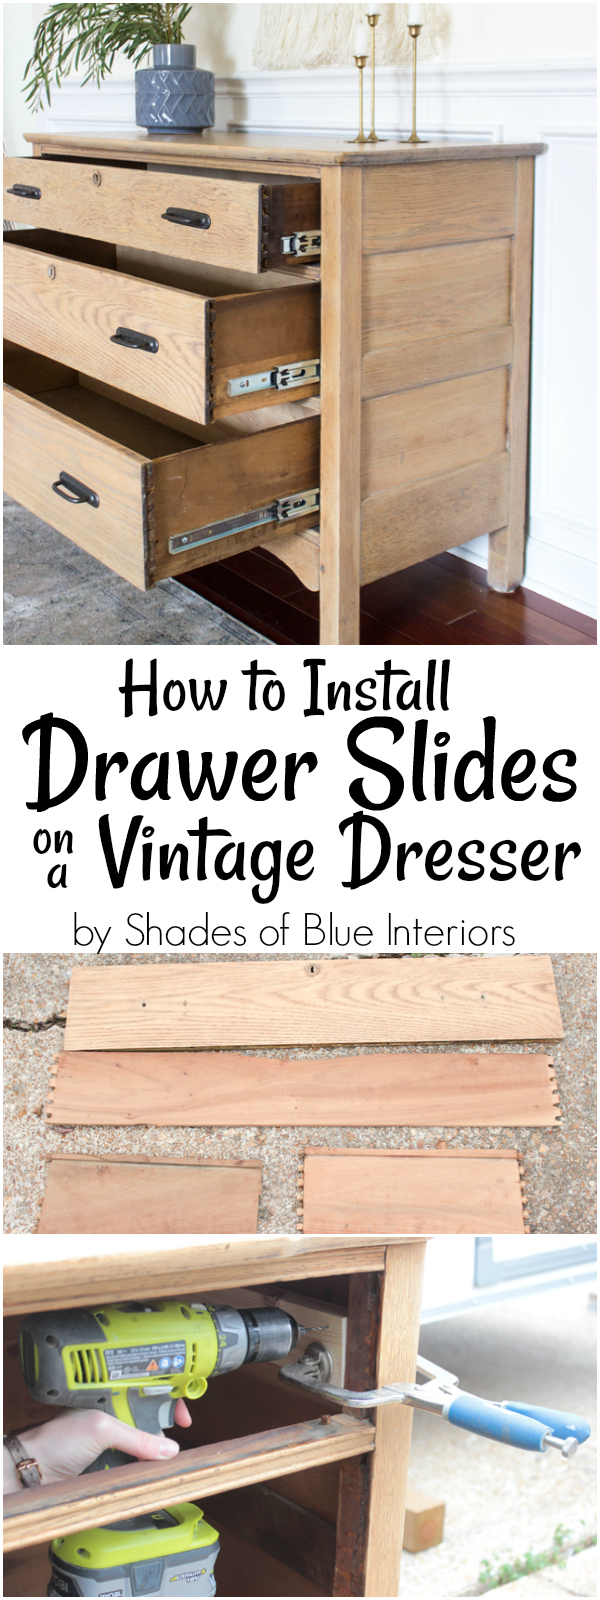 how to install drawer slides on a vintage dresser - shades of blue